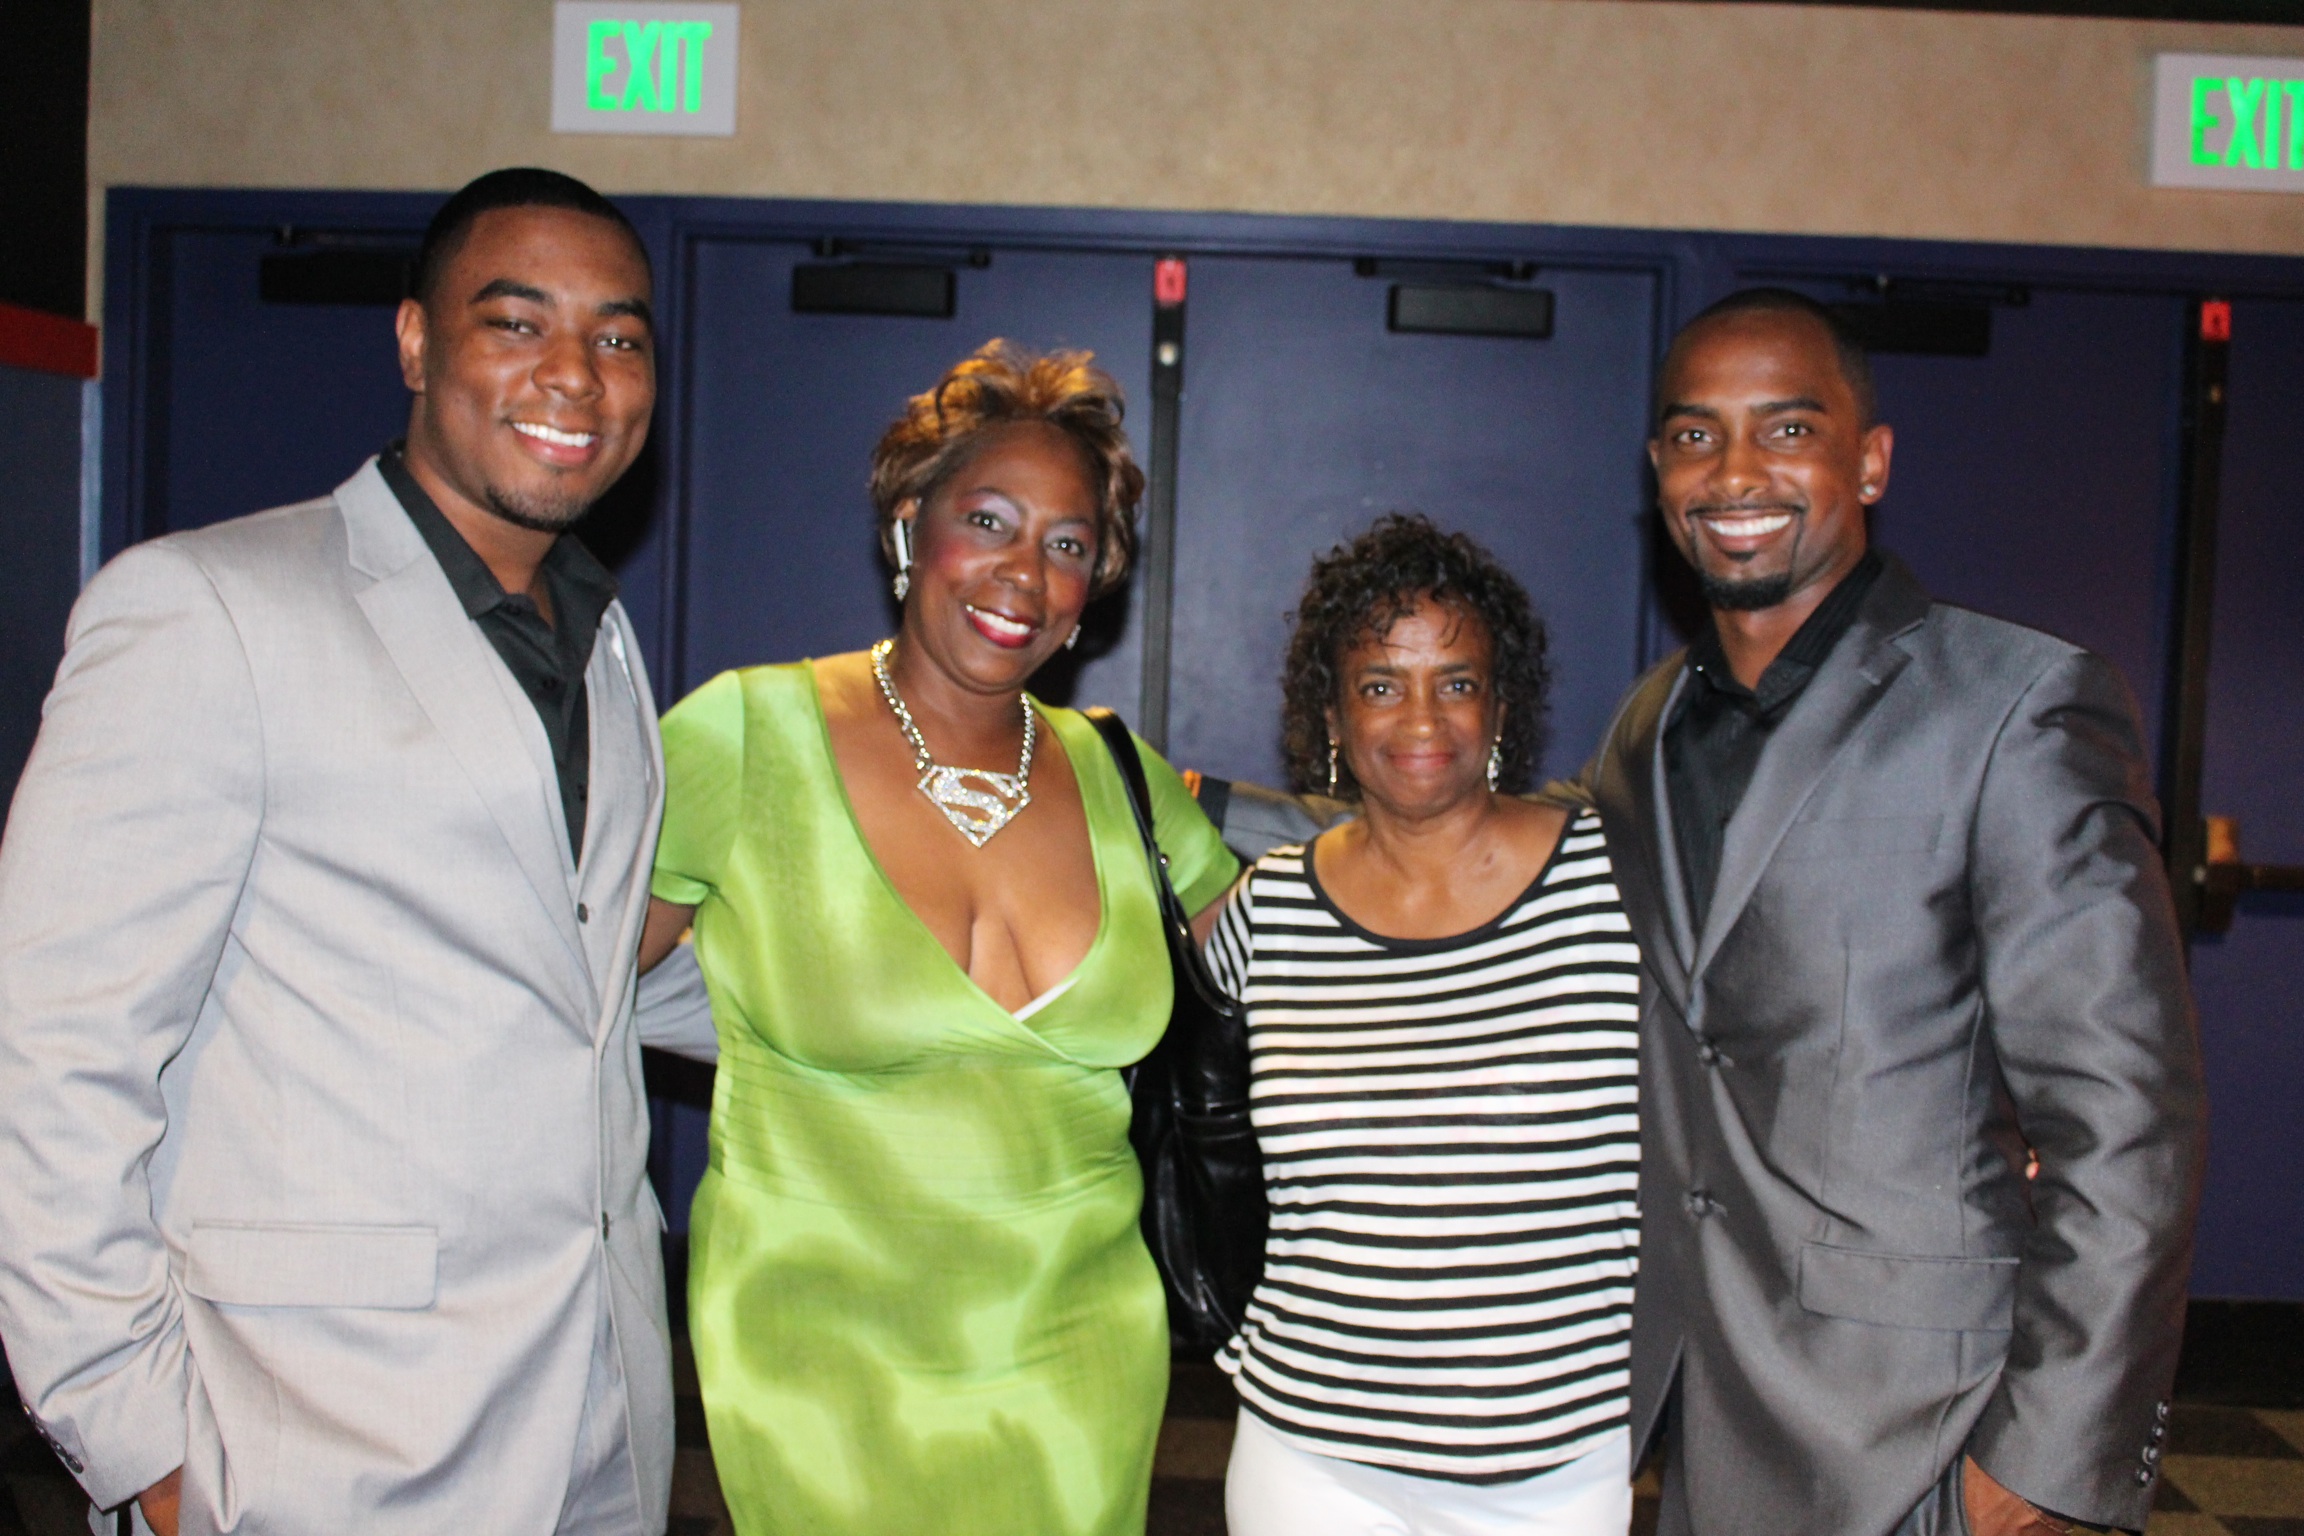 Byron Smith, Aletha Mills, Linda Jackson and Markiss McFadden at the Las Vegas Black Film Festival.